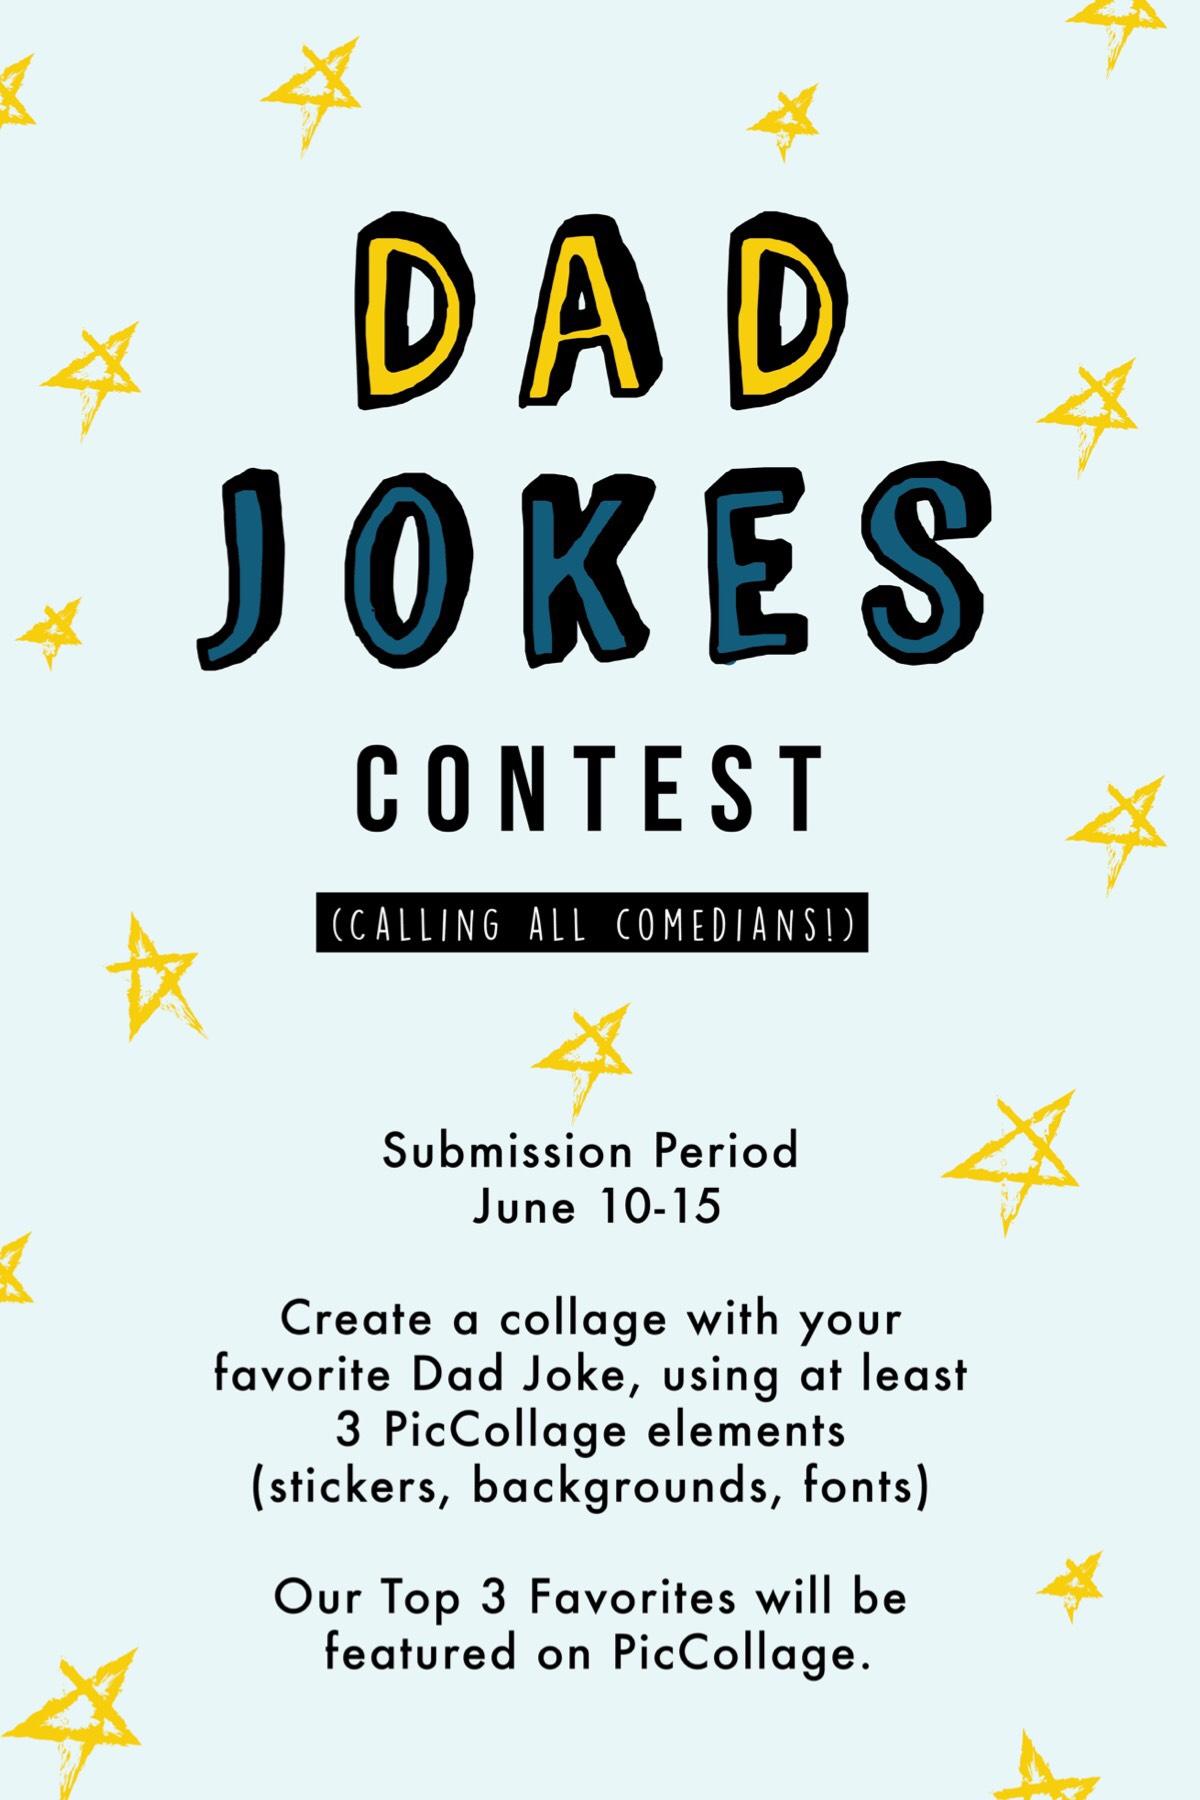 Tell us your favorite dad jokes! 🤣Deadline is June 15, 2019!